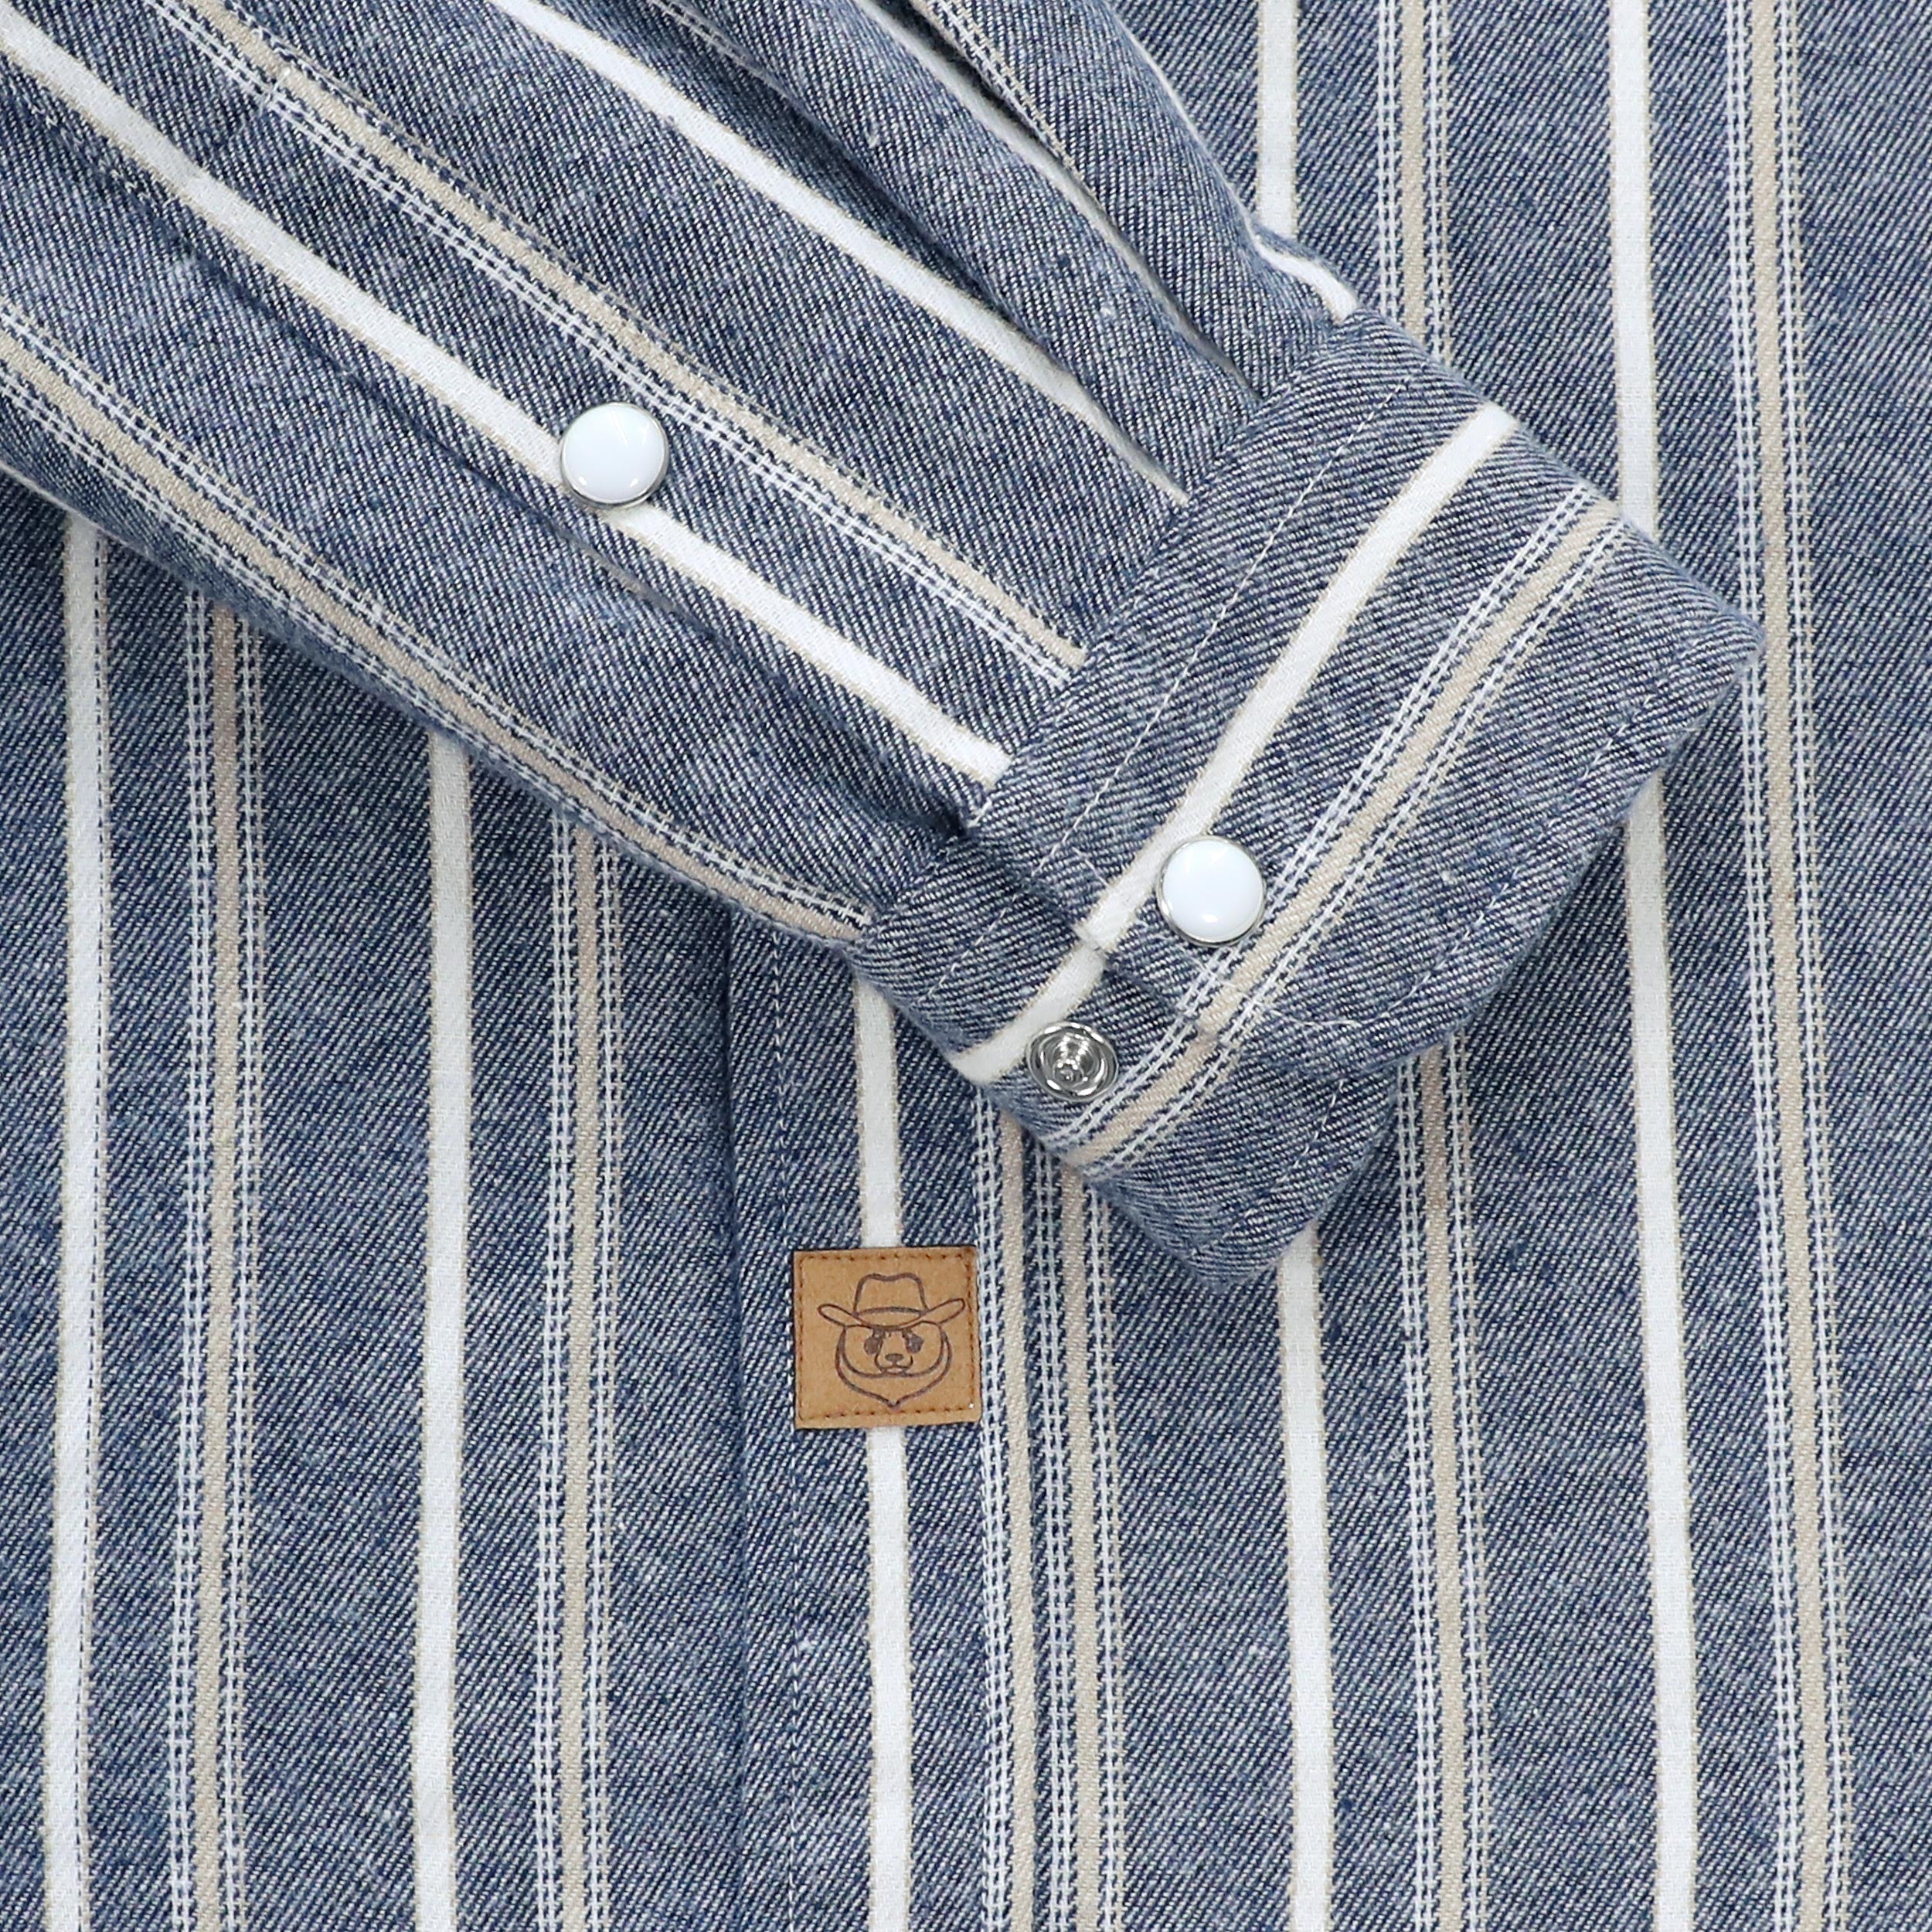 Dubinik® Flannel Shirt For Men Western Cowboy Pearl Snap Shirts For Men Long Sleeve Vintage Buttons Down Plaid Shirt #28504